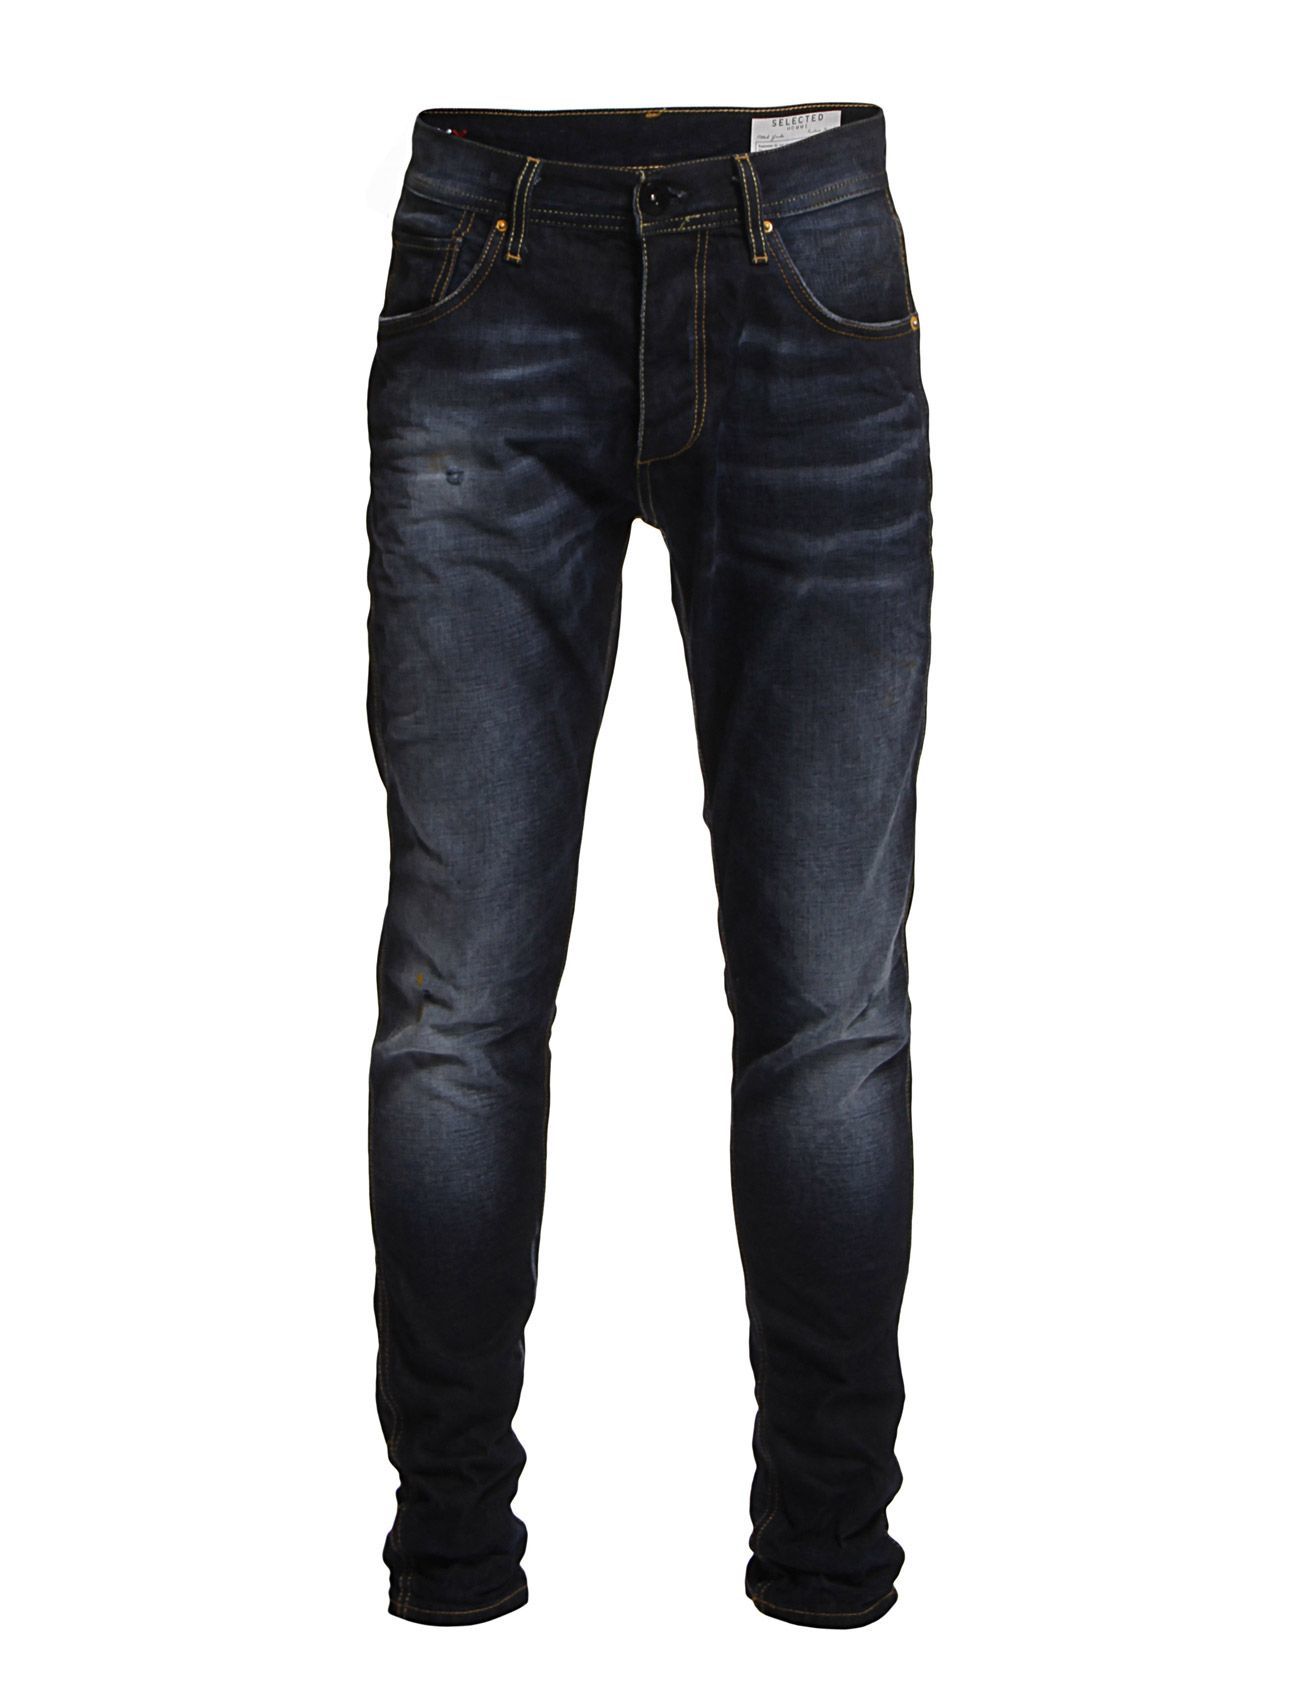 Women's|Men's Five Rico 1295 Jeans Noos J